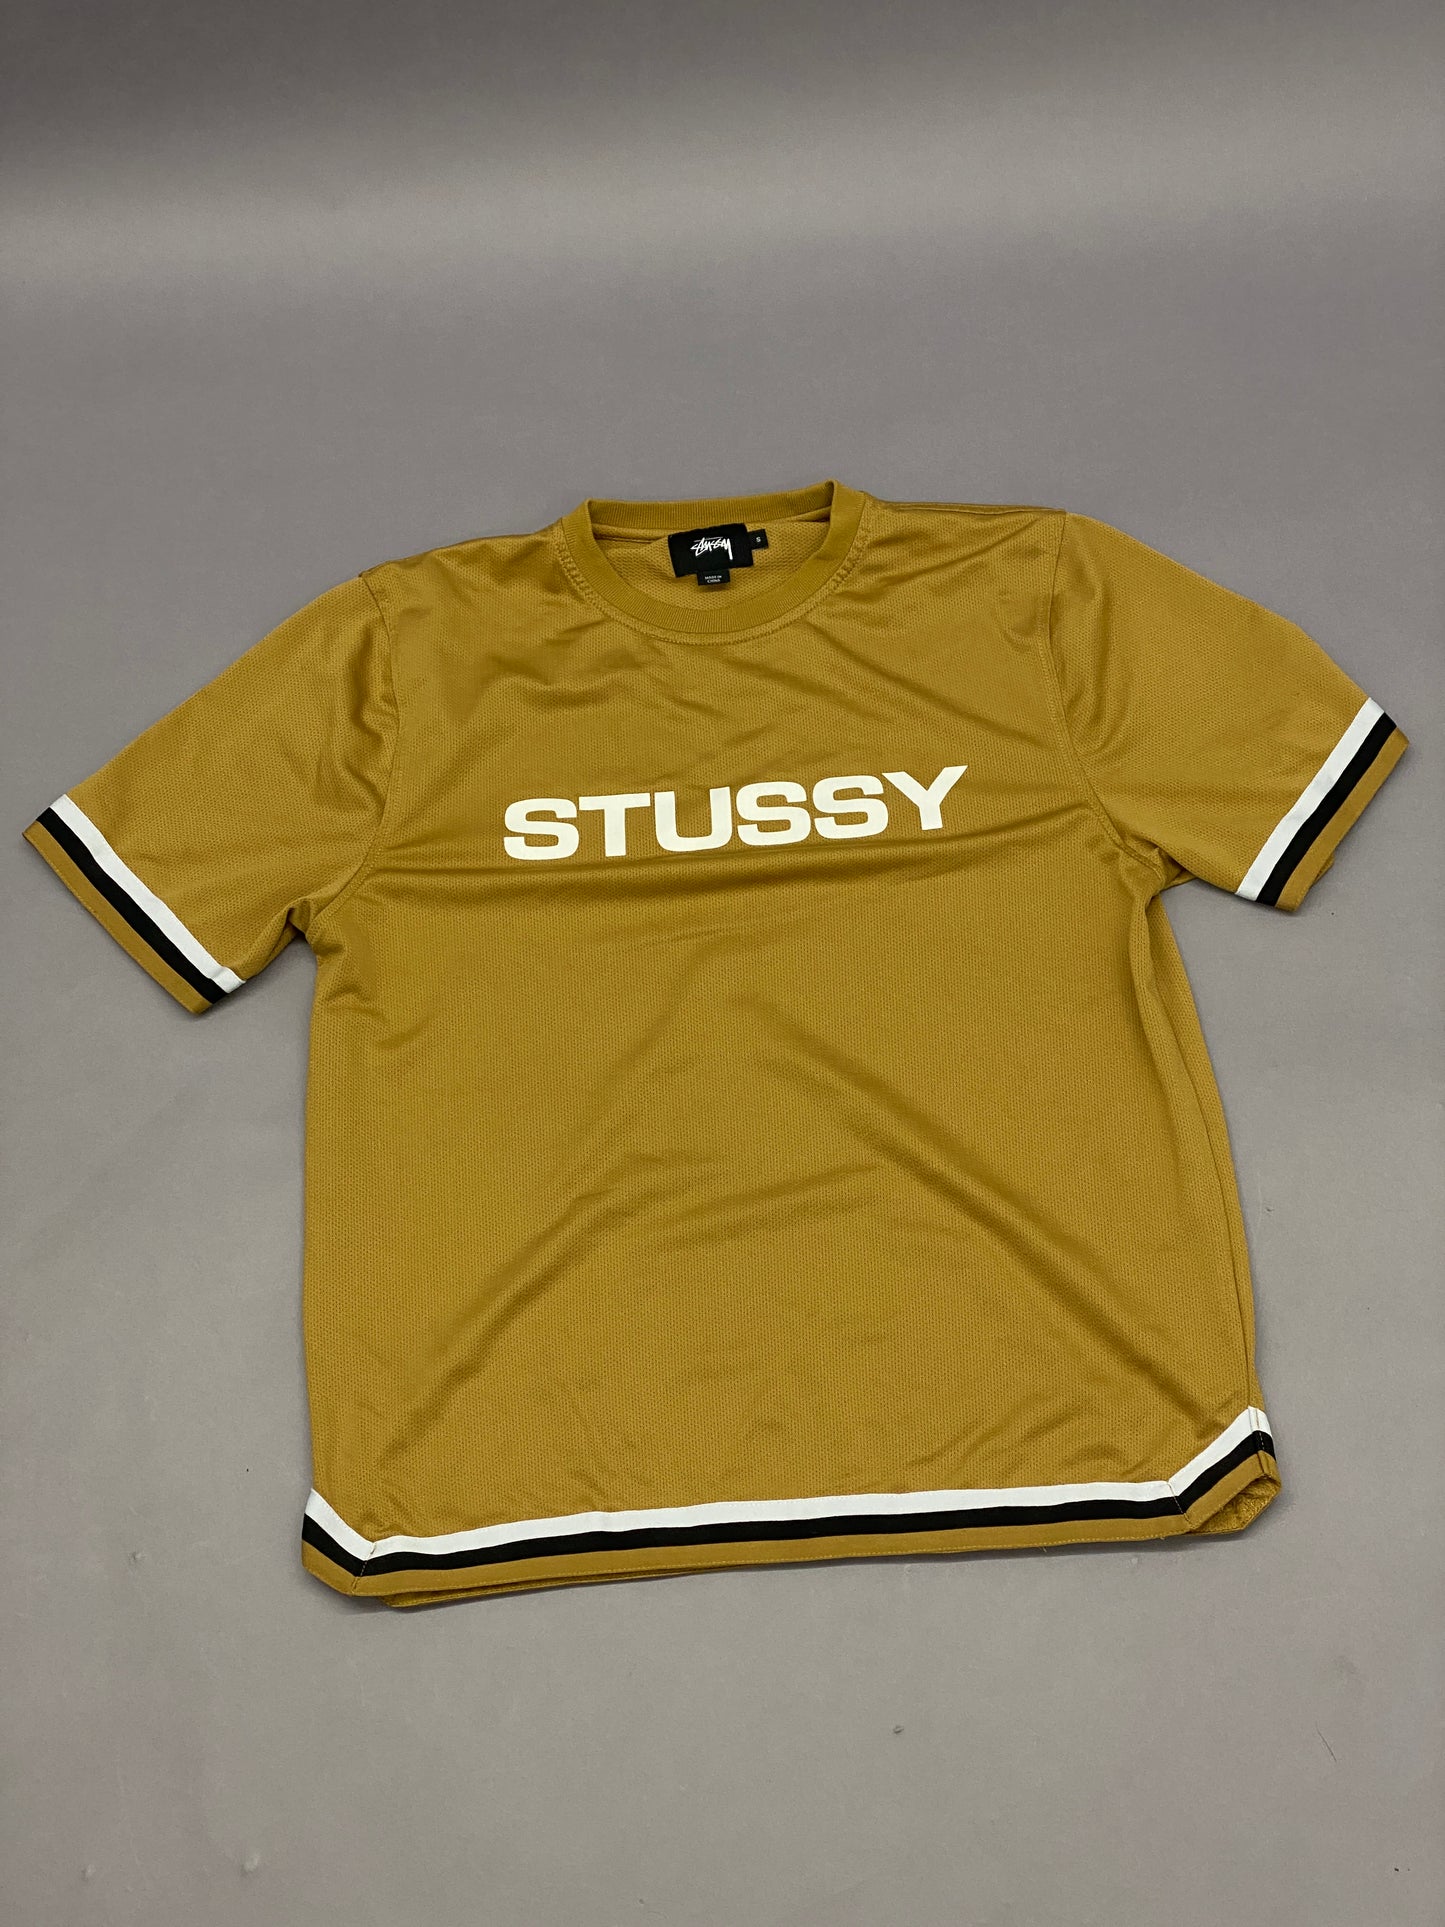 Stussy jumper